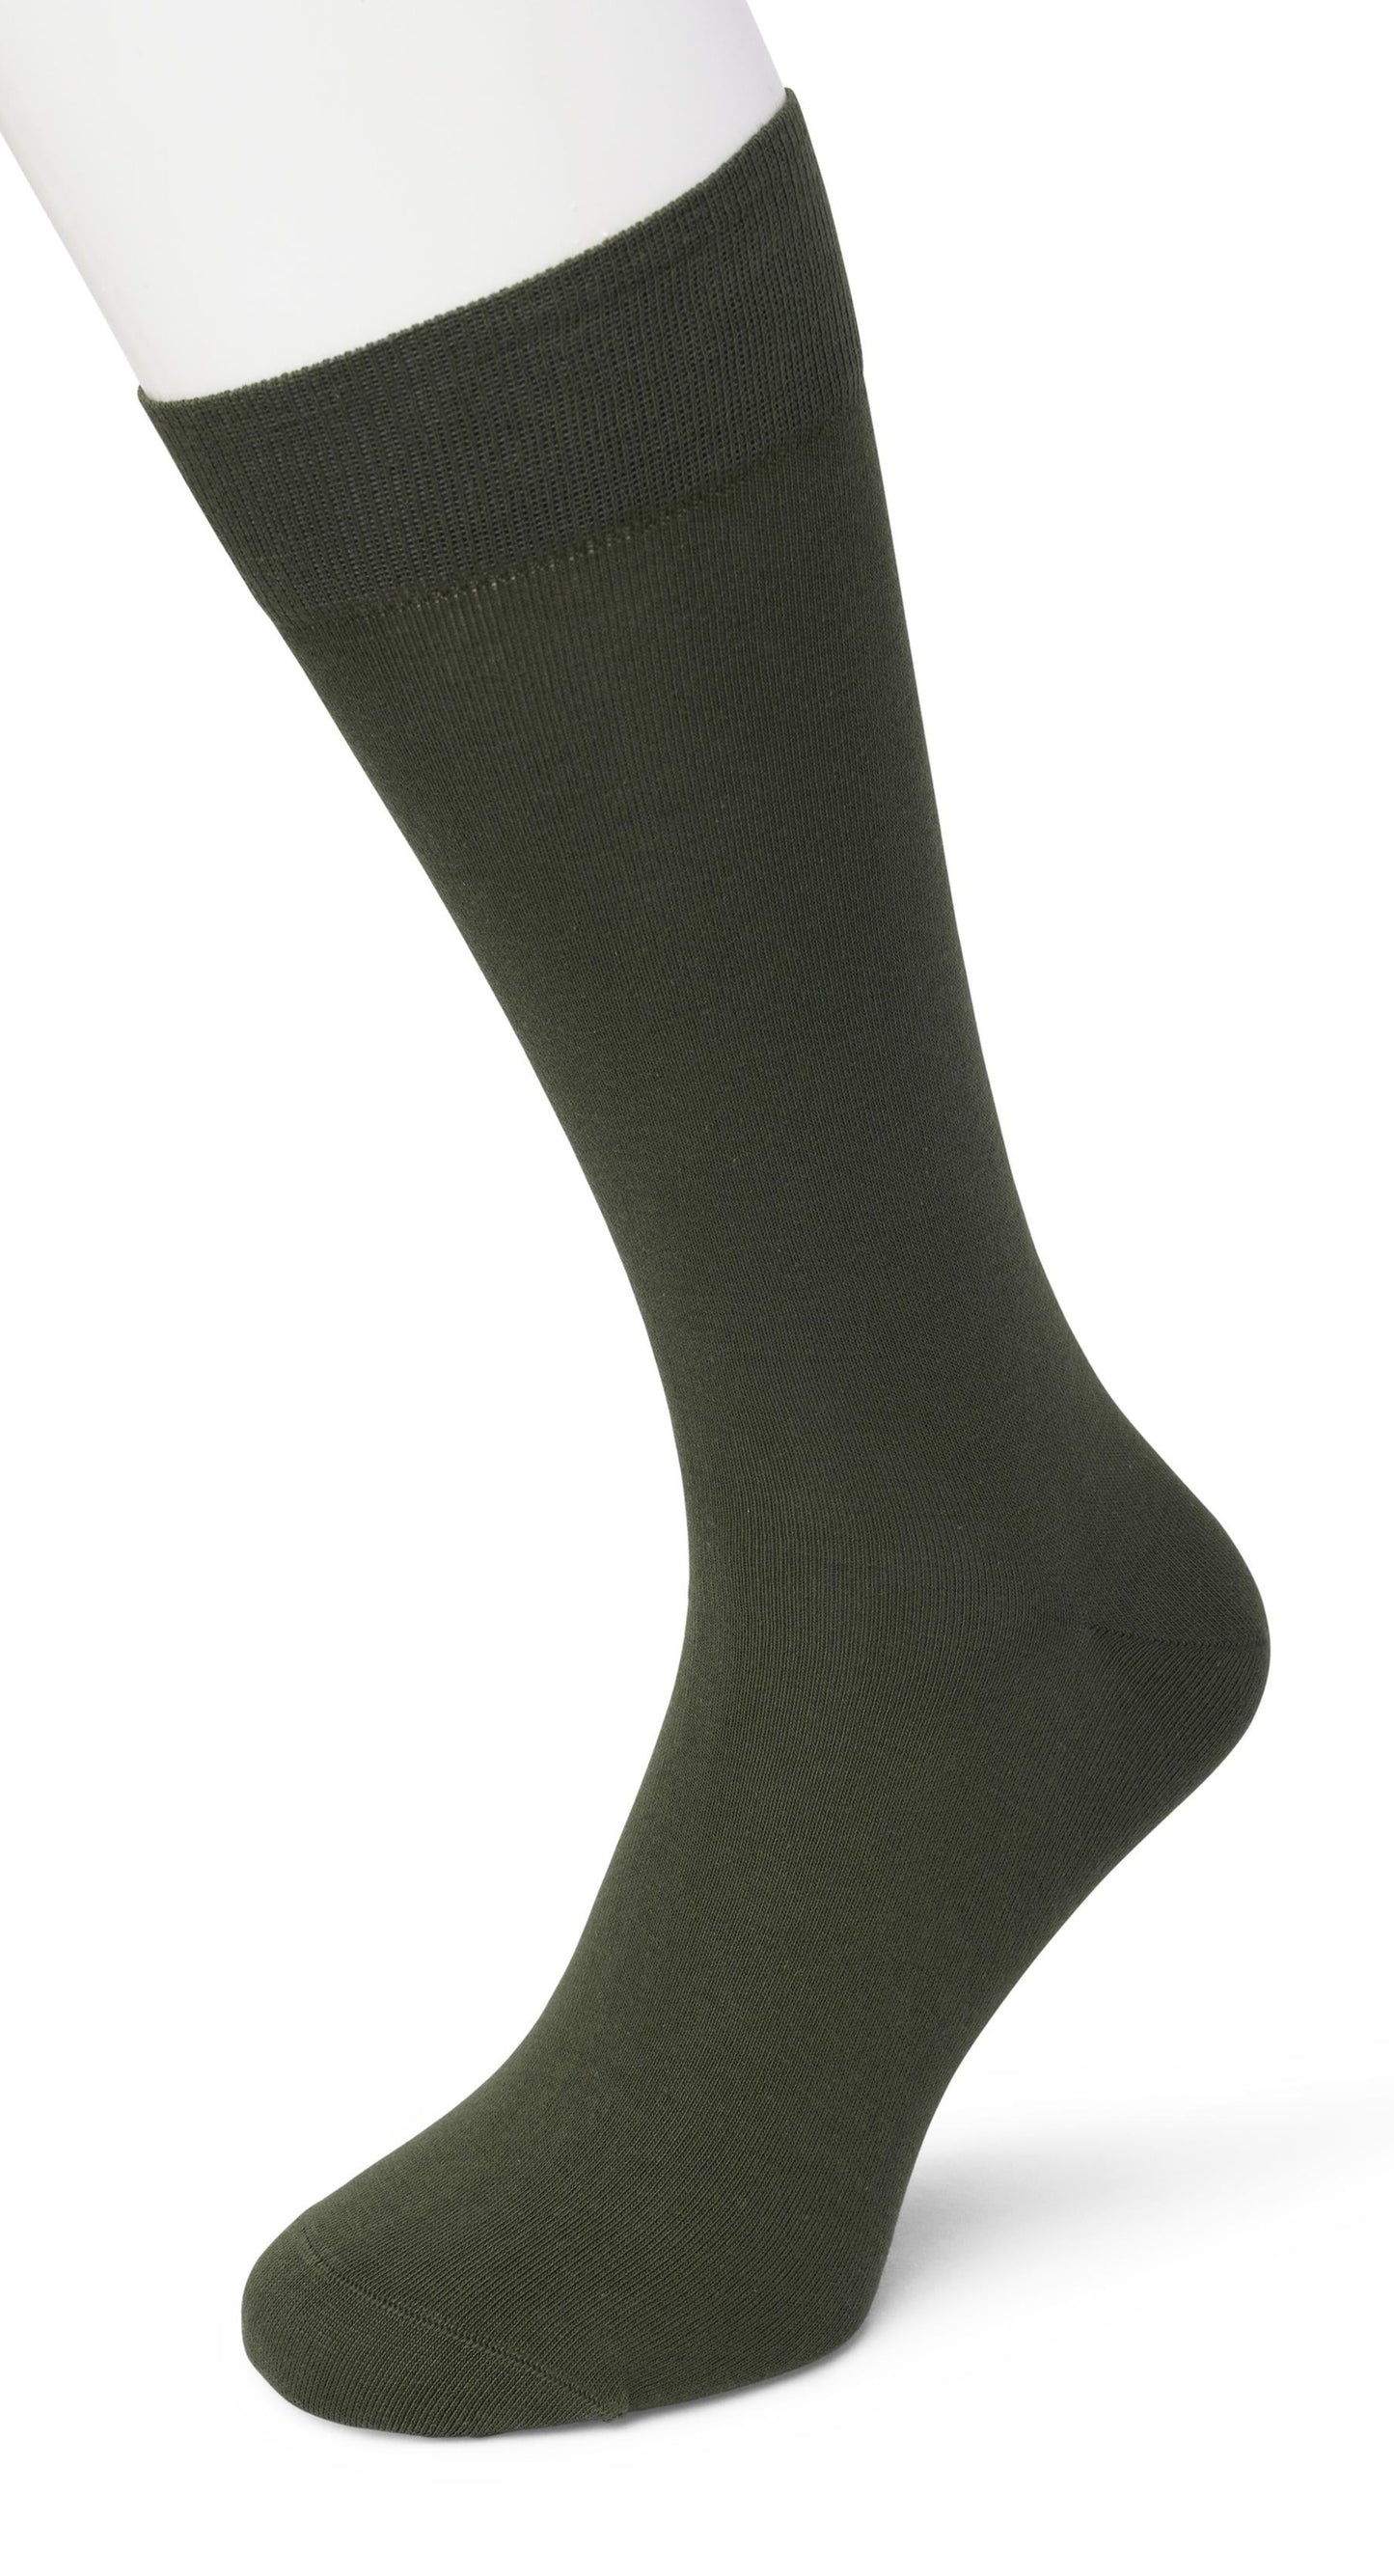 Bonnie Doon 83422 / BD632401 Cotton Sock -  khaki (faded khaki) ankle socks available in men and women sizes.